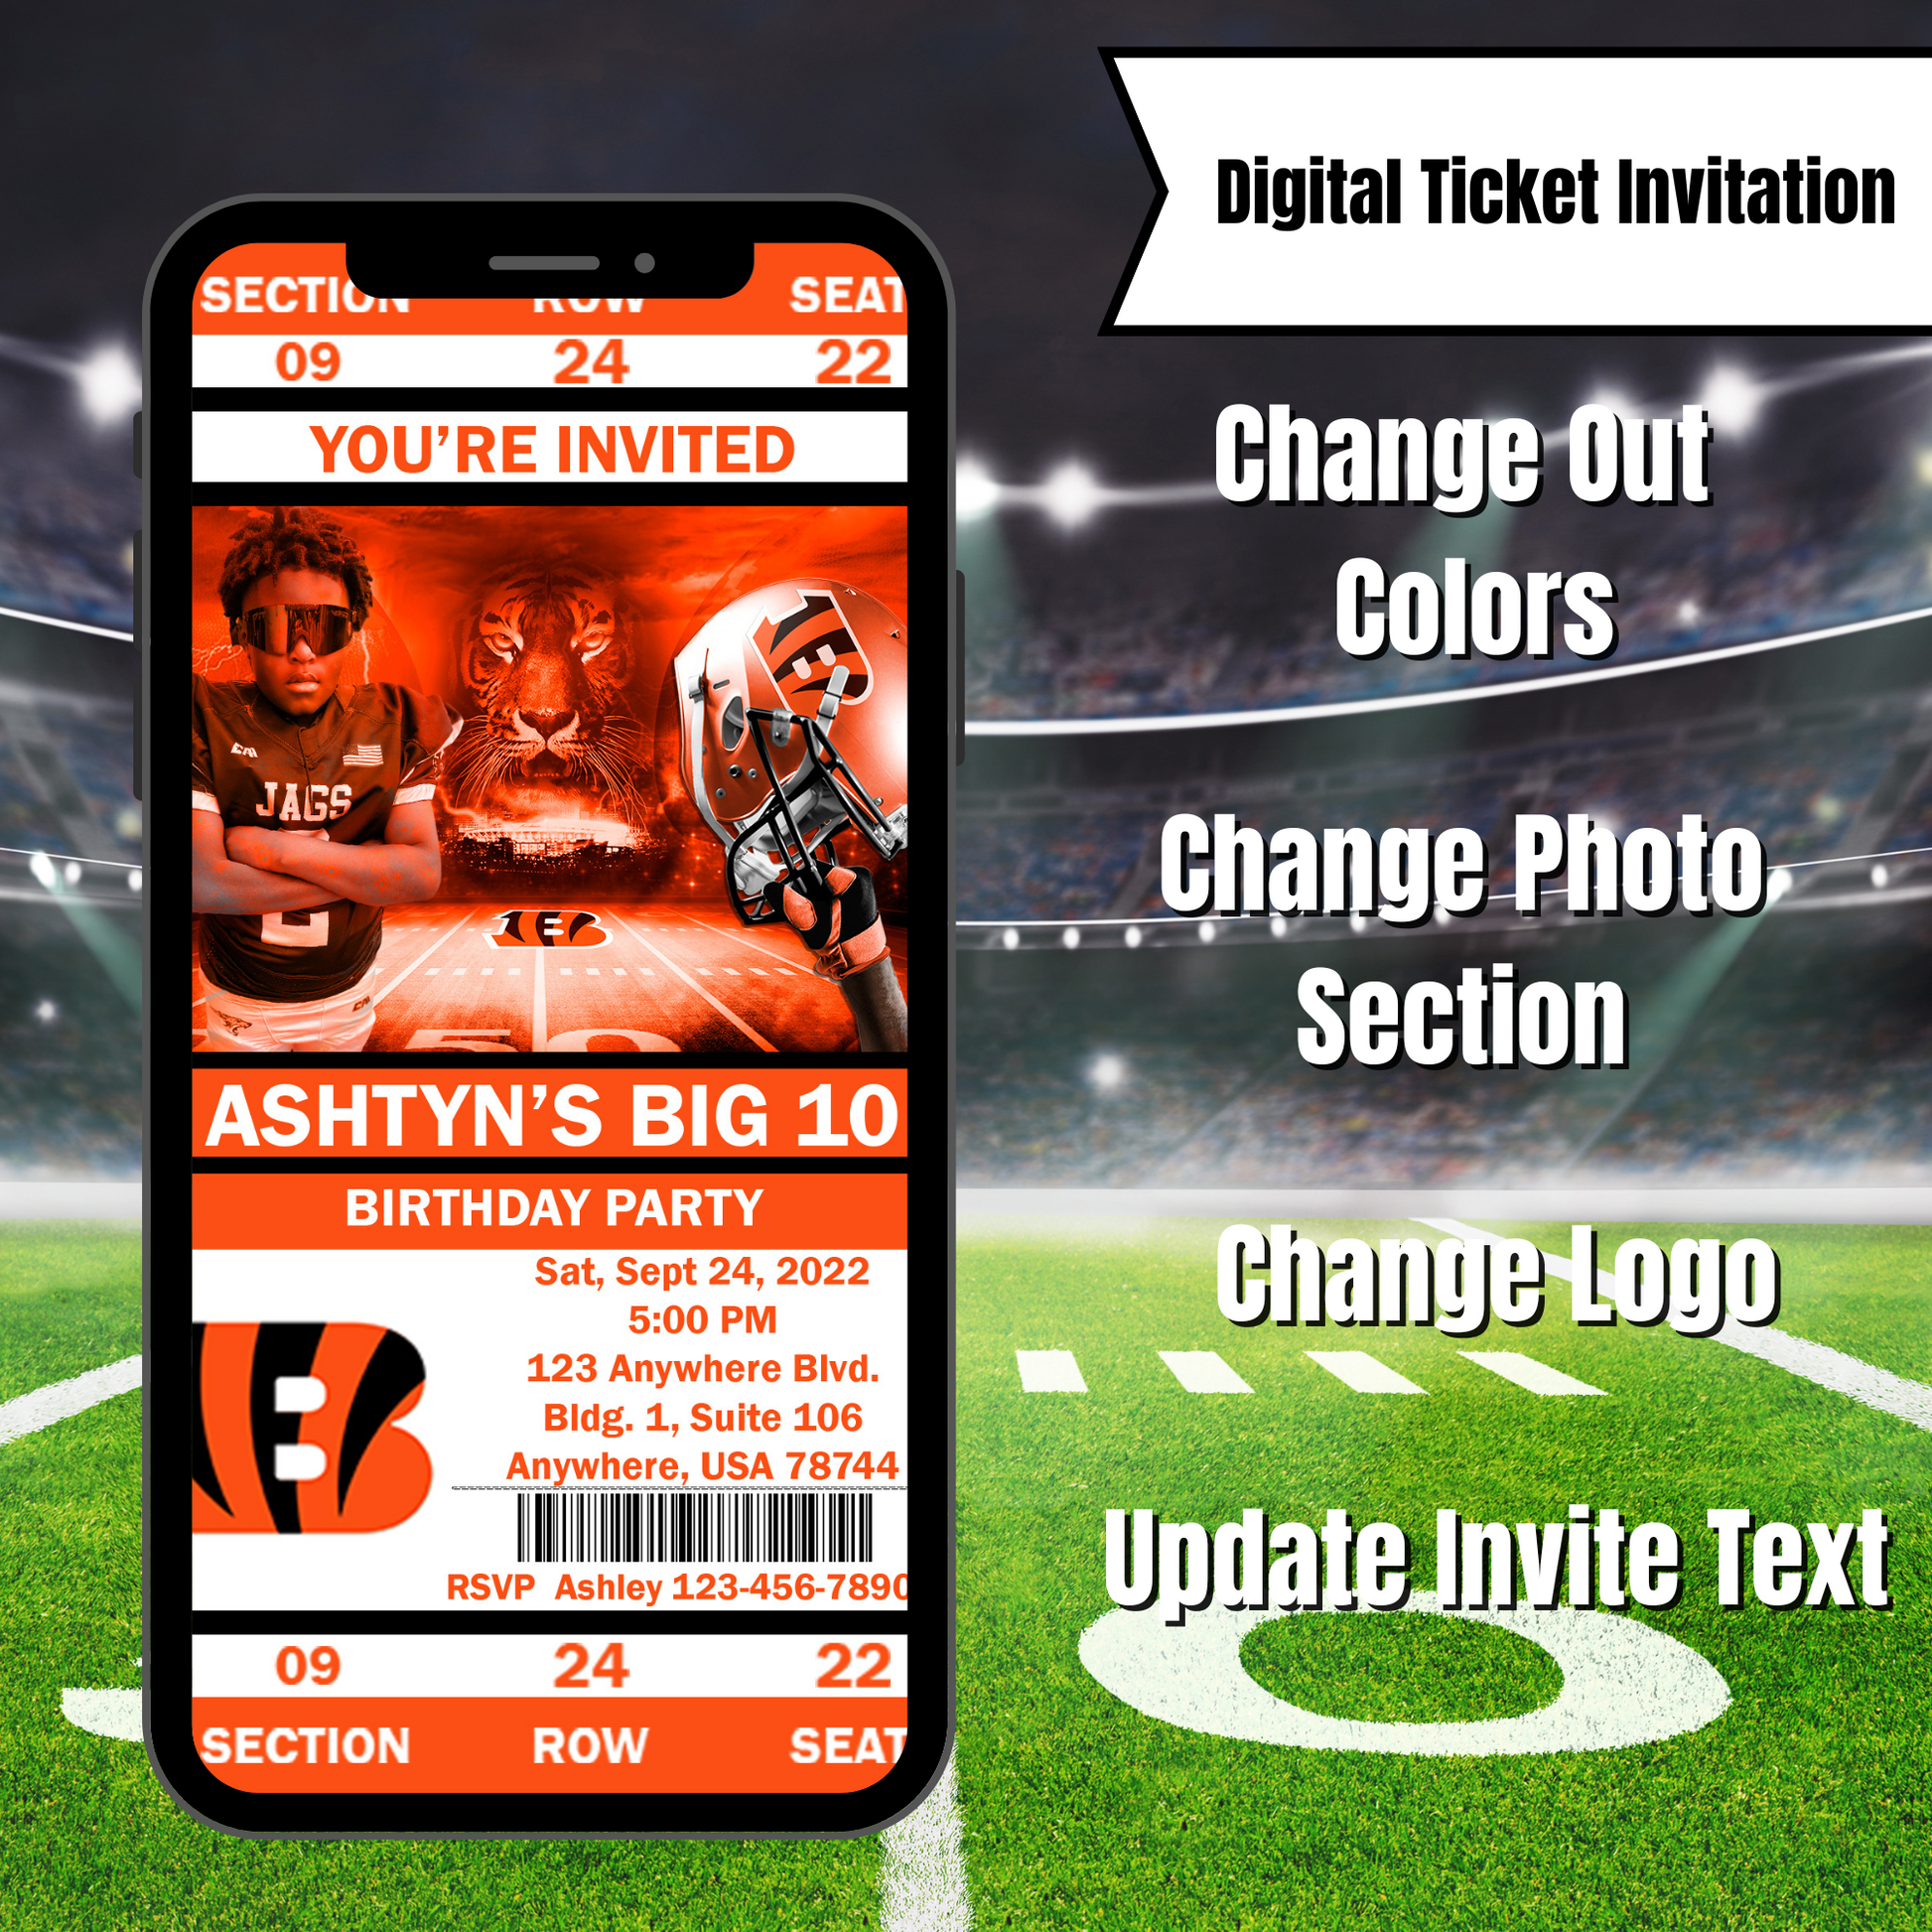 Sports Theme Ticket Digital Invitation Template - SthrngurlCreations